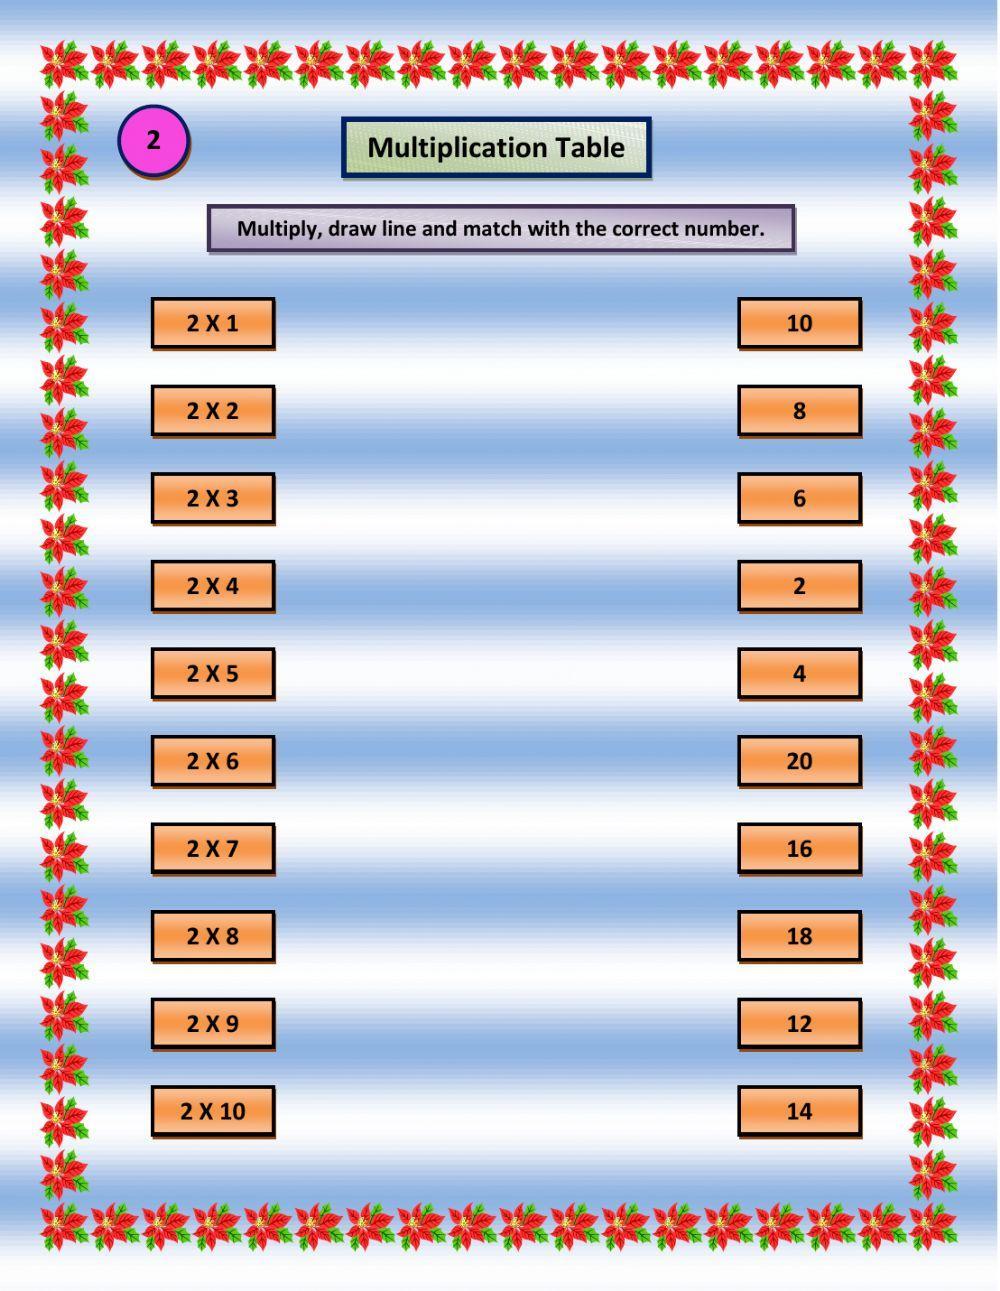 Multiplication Table : 2